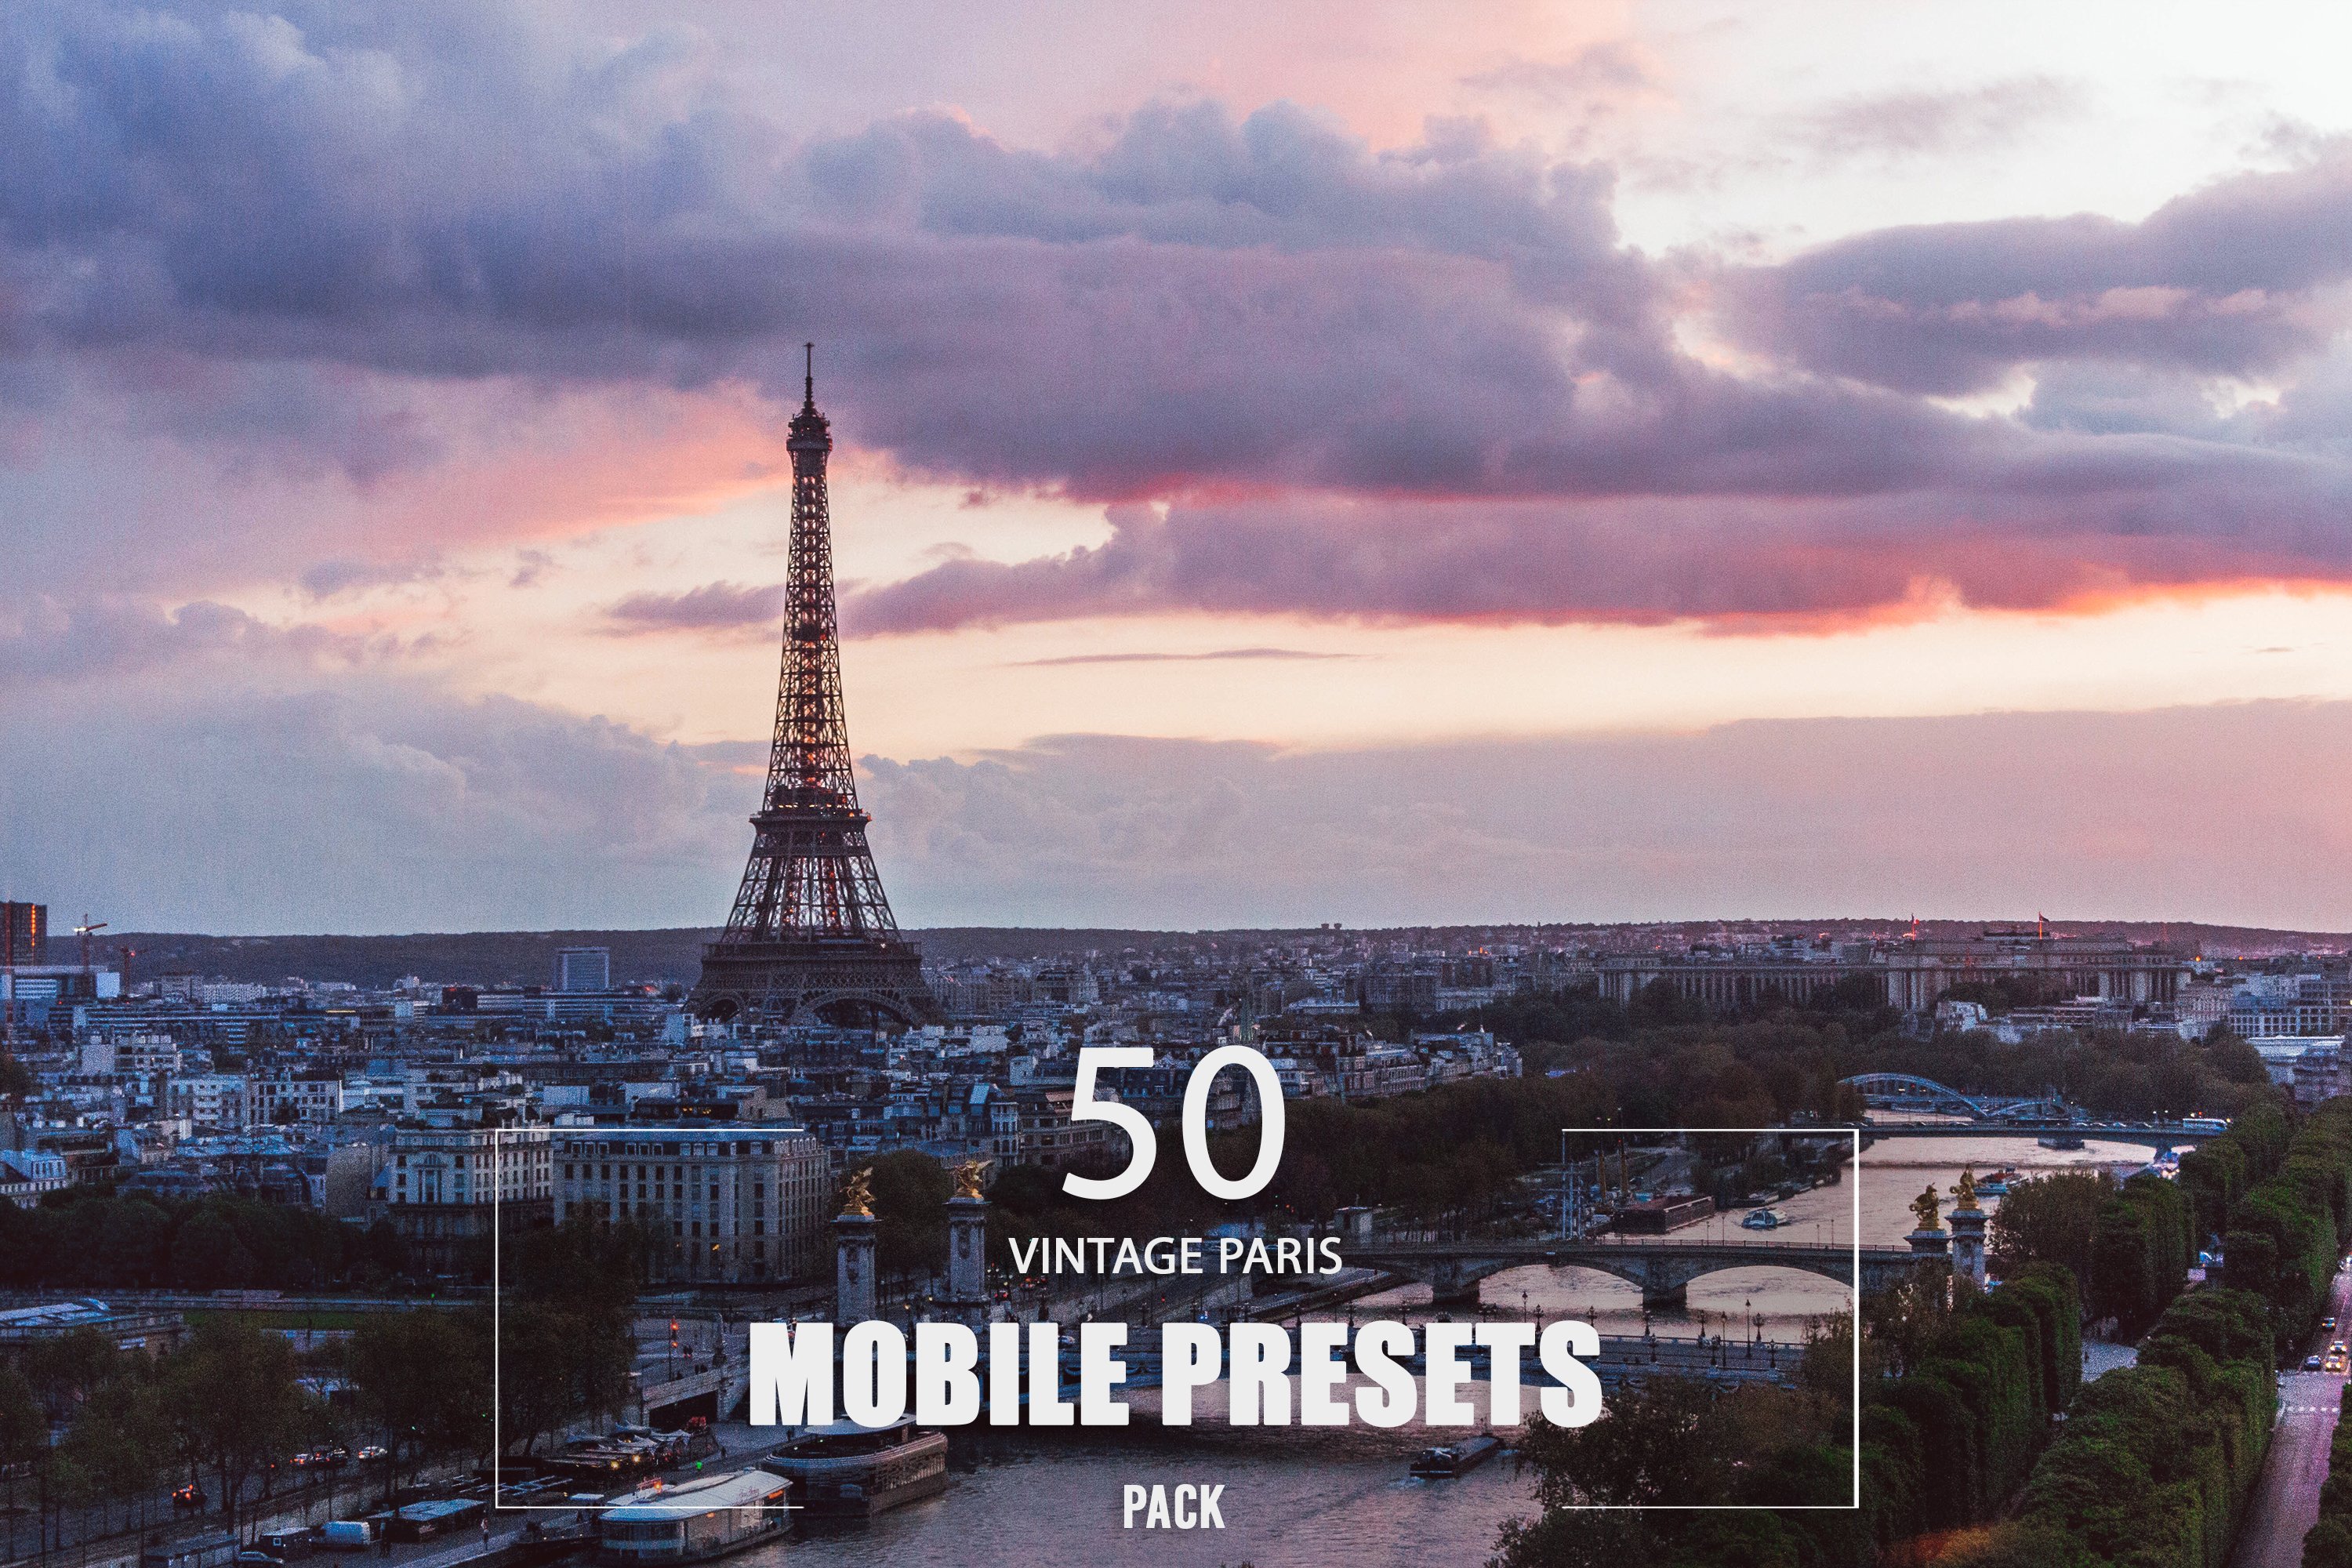 50 Vintage Paris Mobile Presets Packcover image.